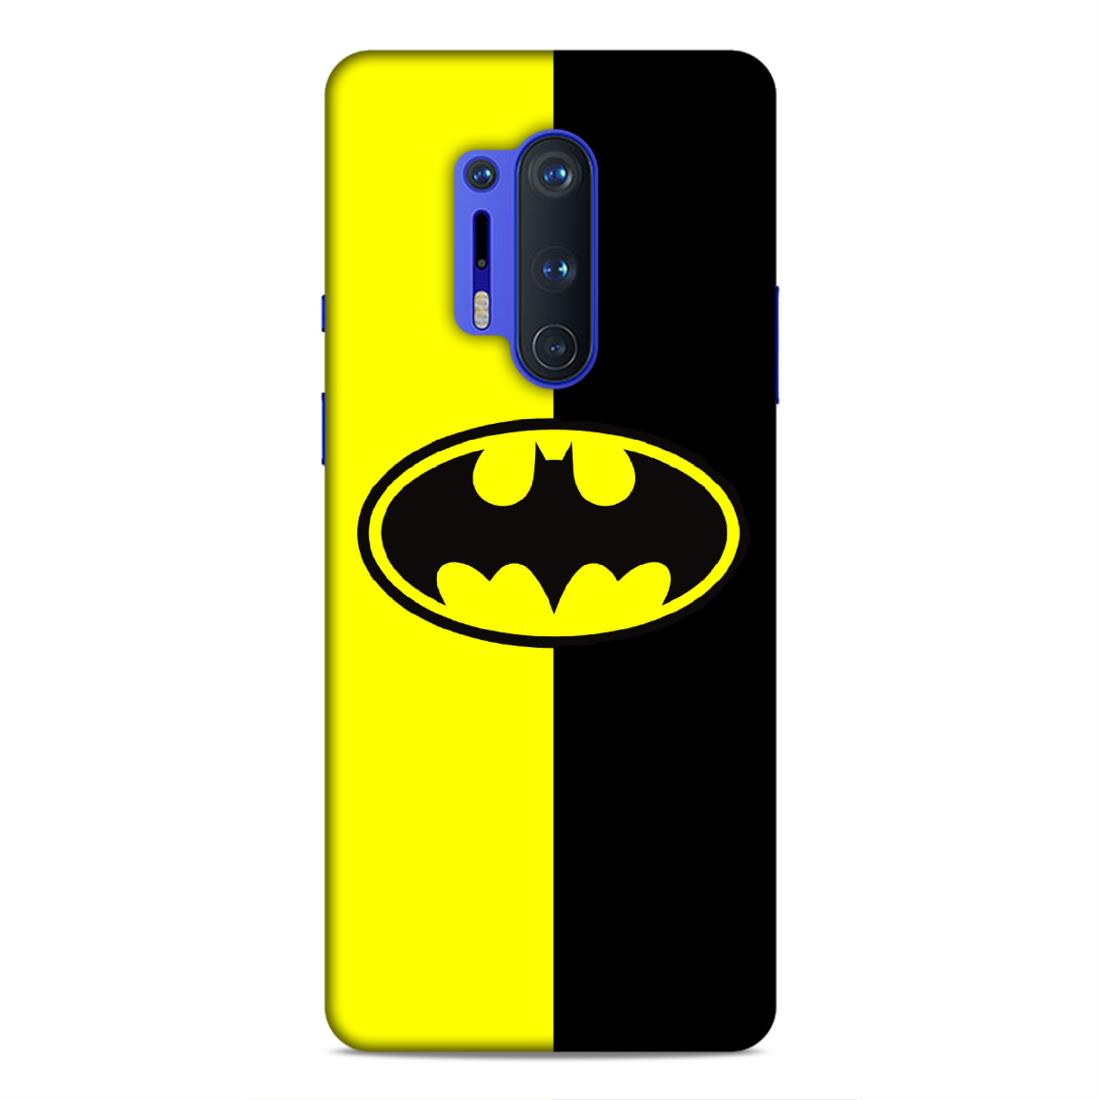 Batman Balck Yellow Hard Back Case For OnePlus 8 Pro